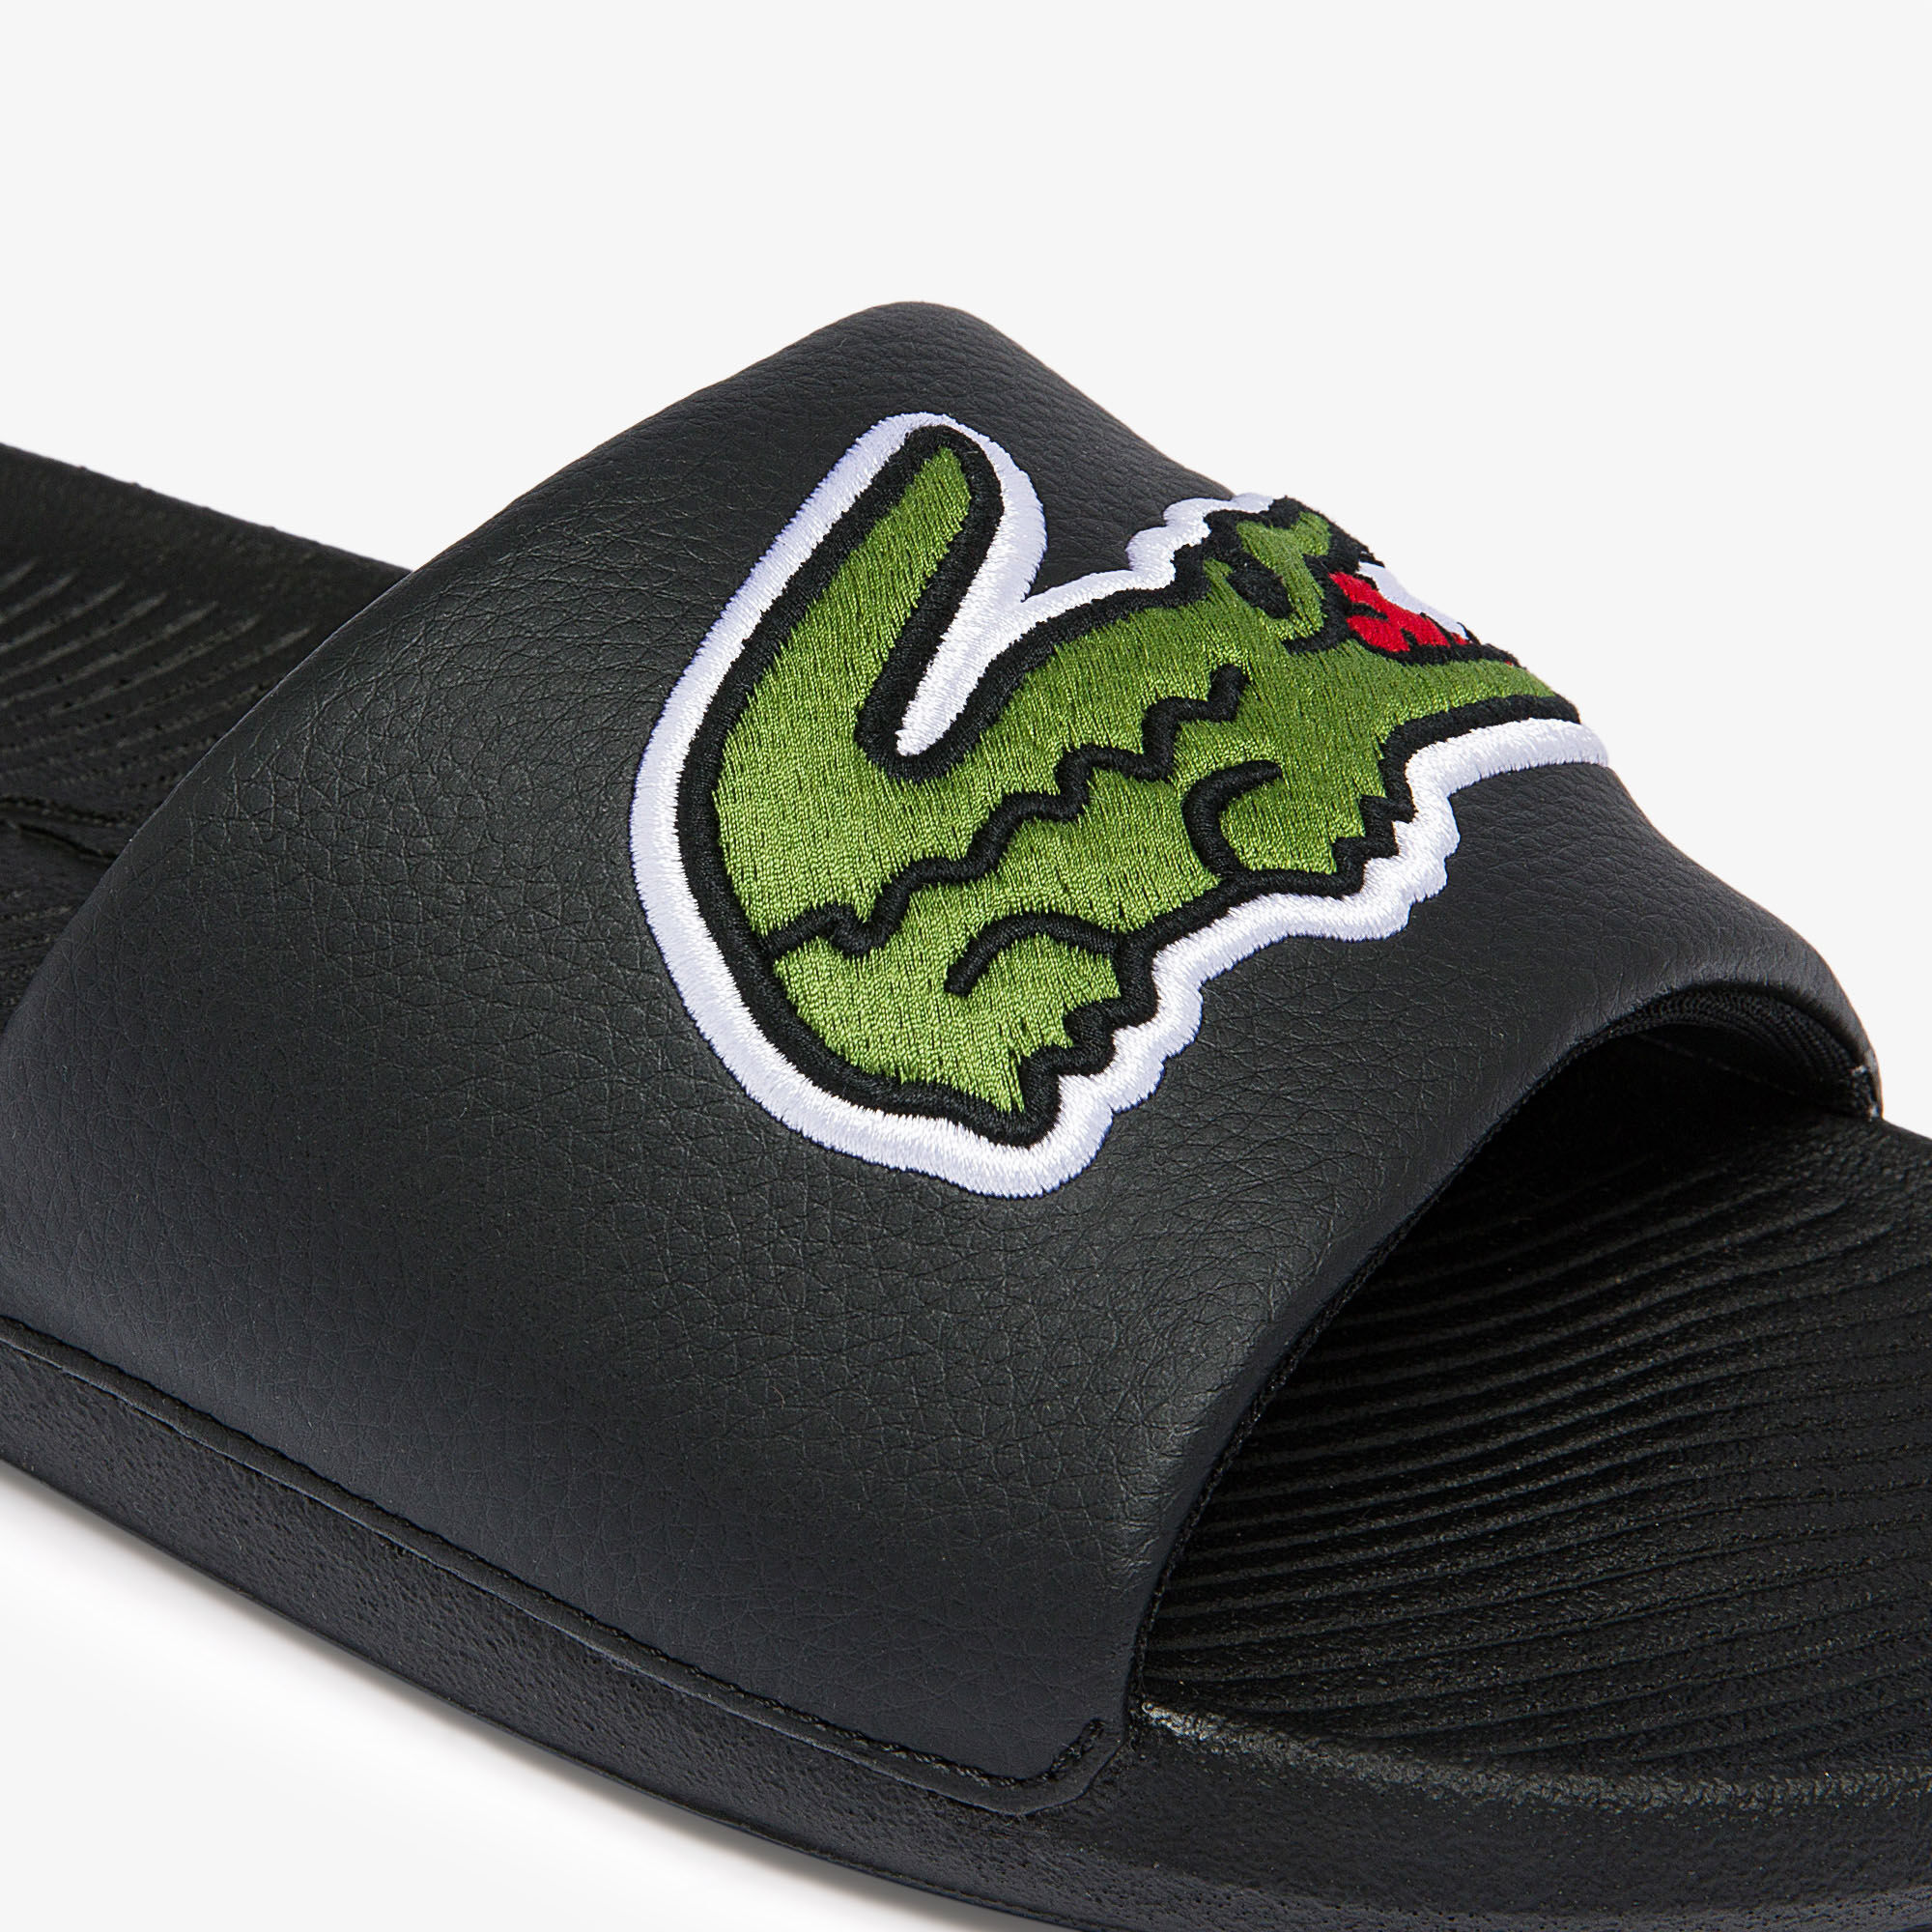 Men's Croco Synthetic Slides